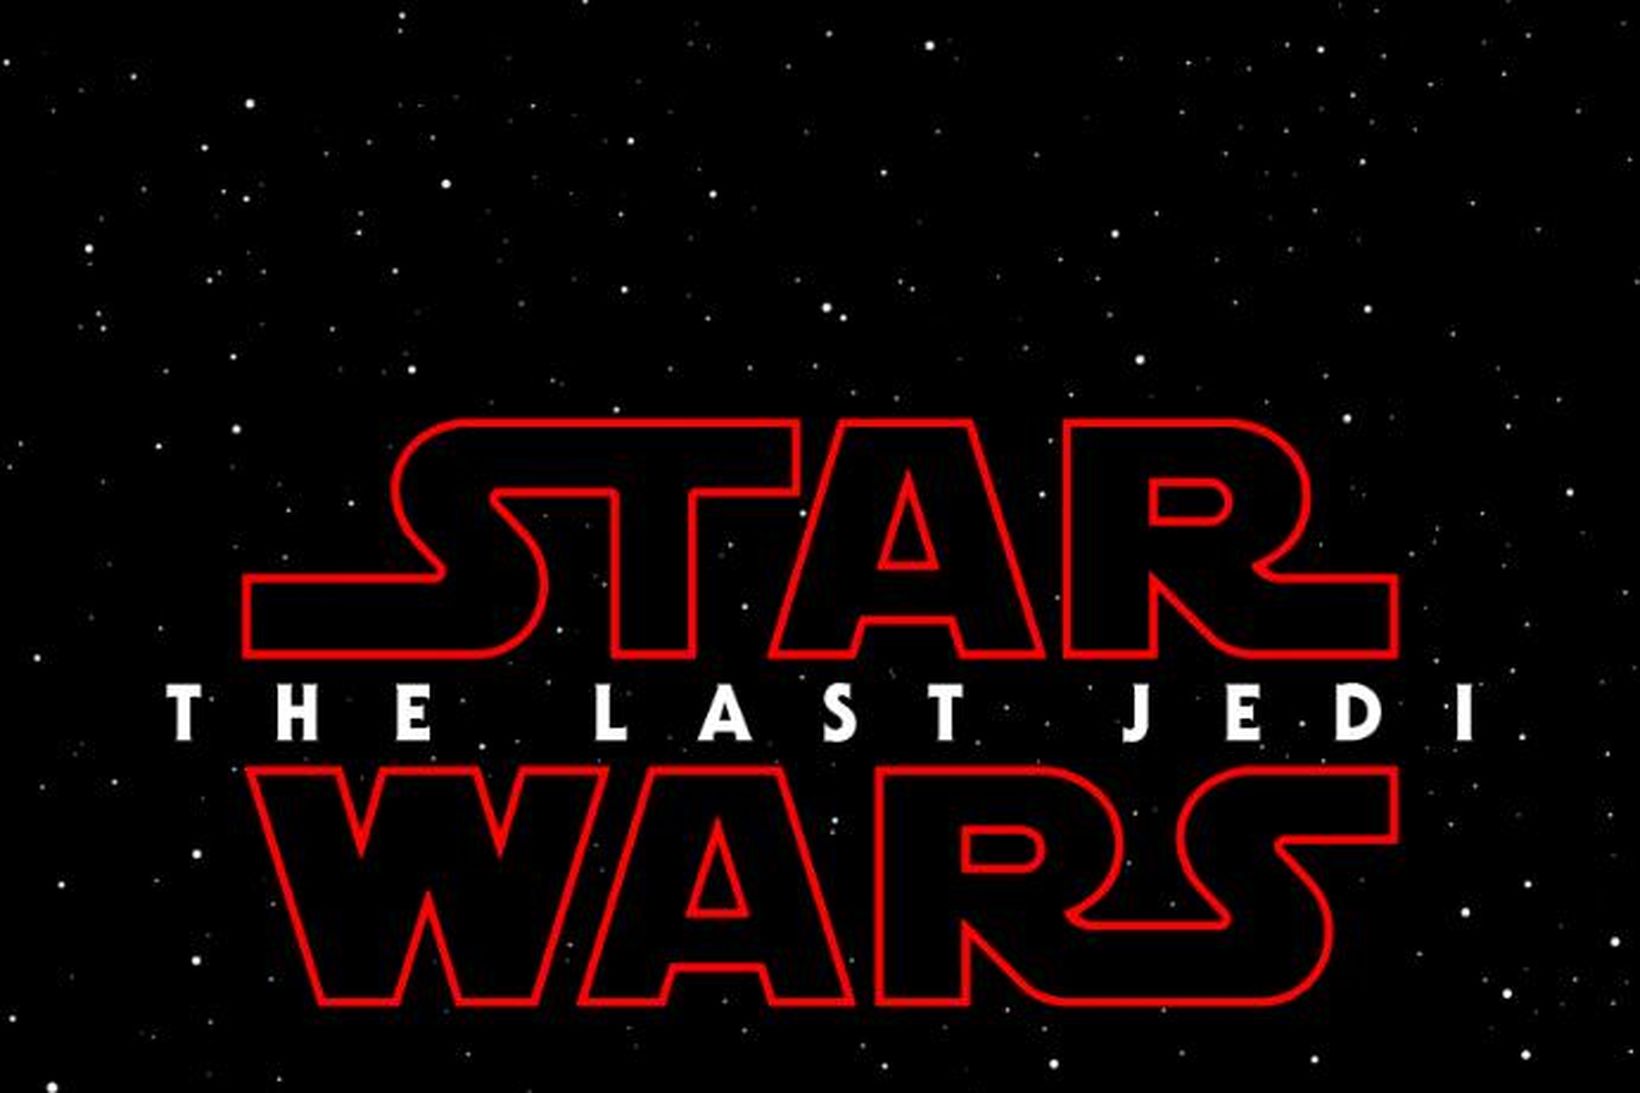 Nýja myndin nefnist Star Wars: The Last Jedi.